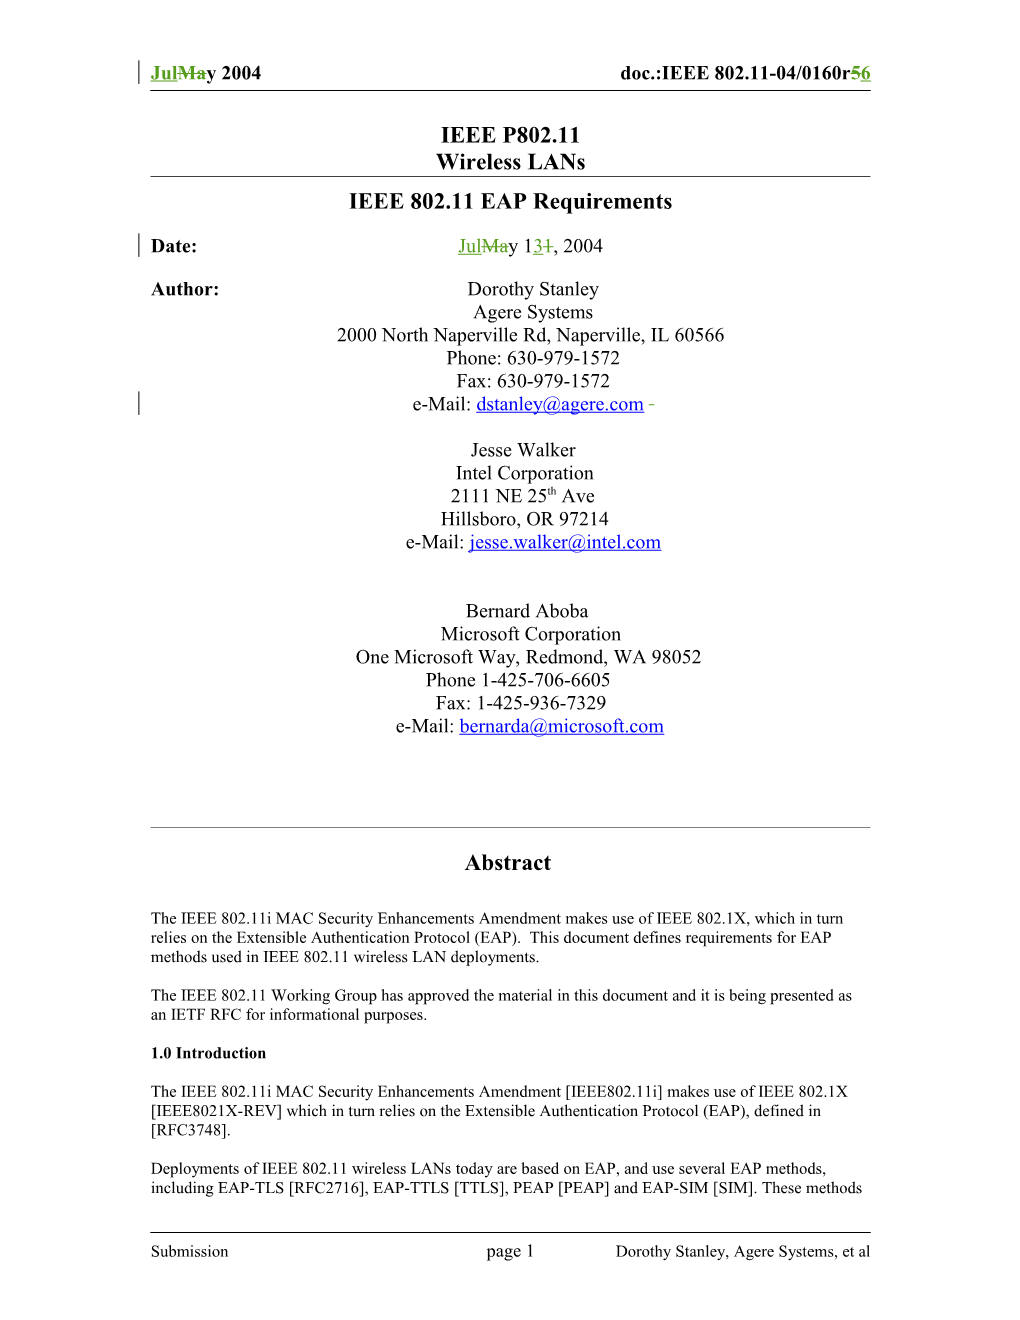 IEEE 802.11 EAP Requirements